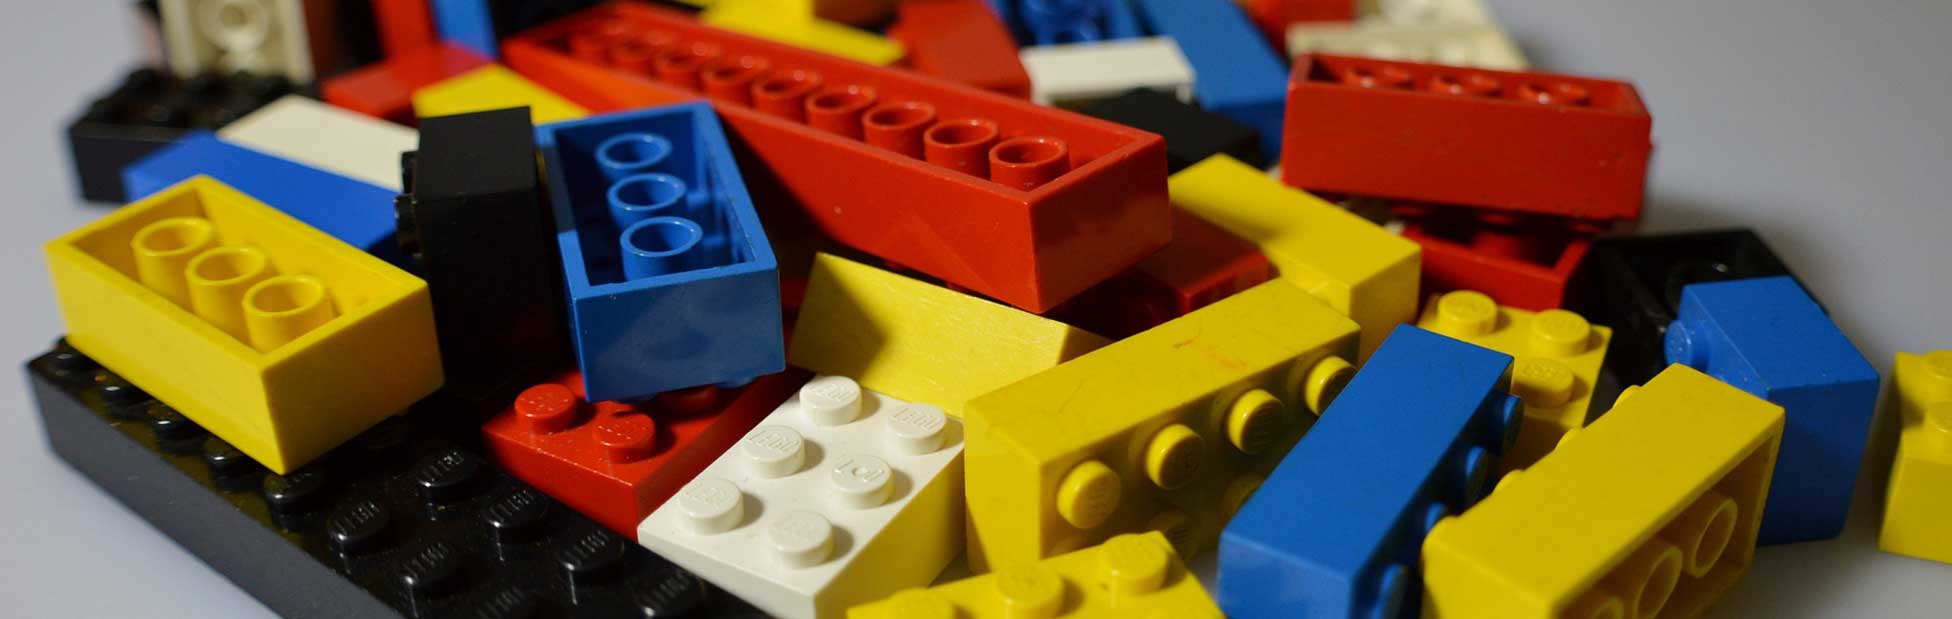 Pile of varied colour Lego bricks